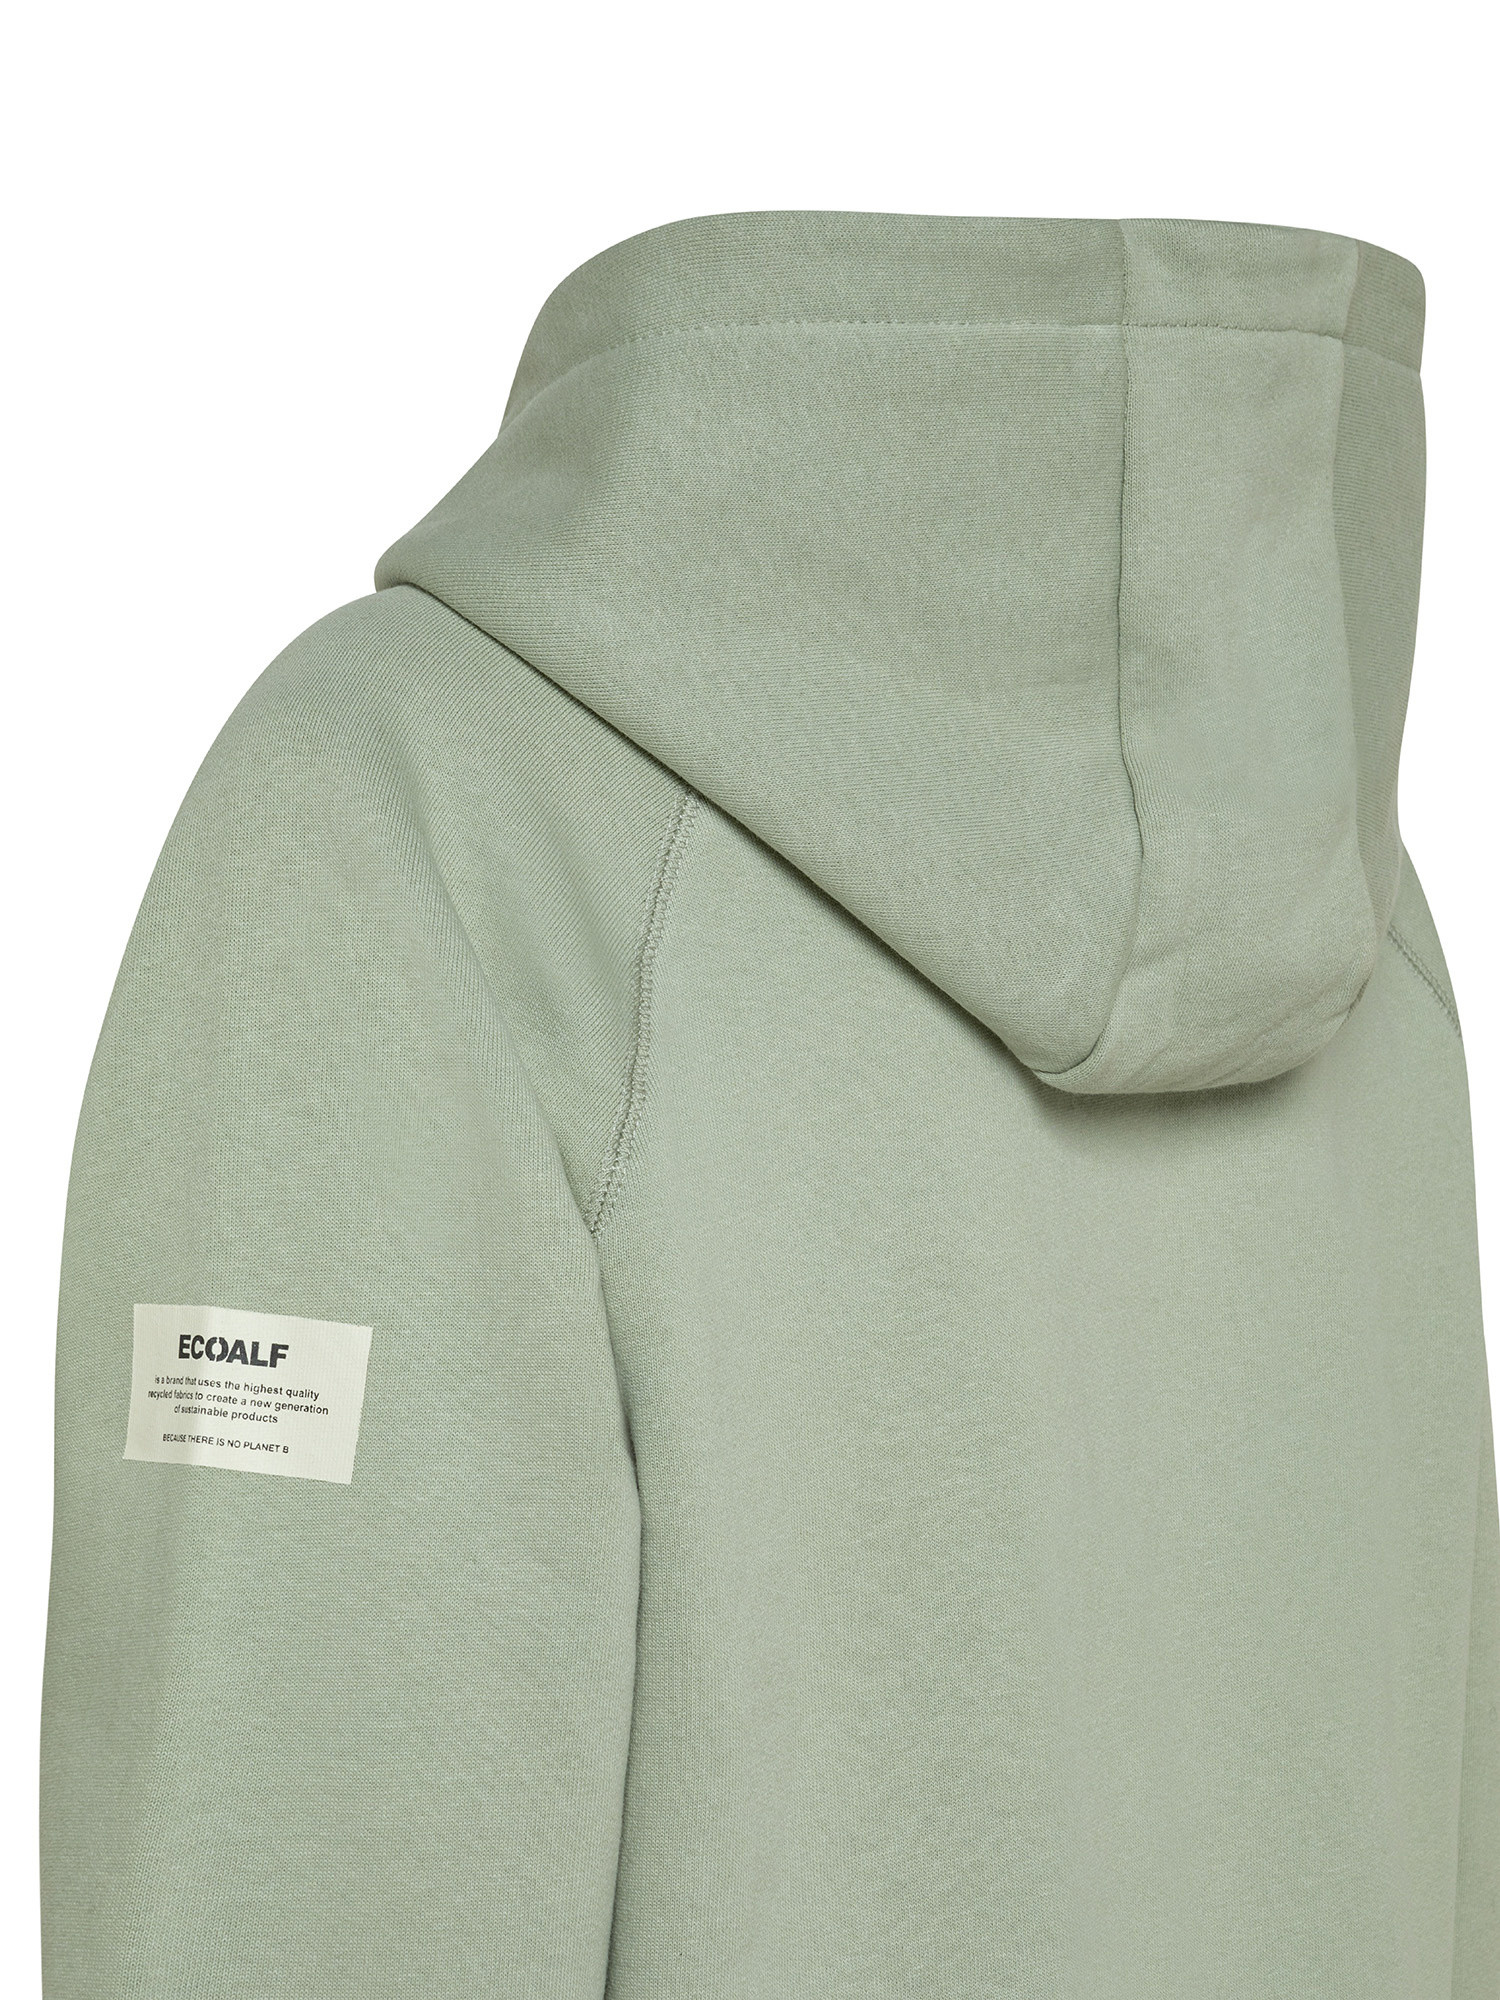 Ecoalf - Plin sweatshirt with print, Light Green, large image number 2